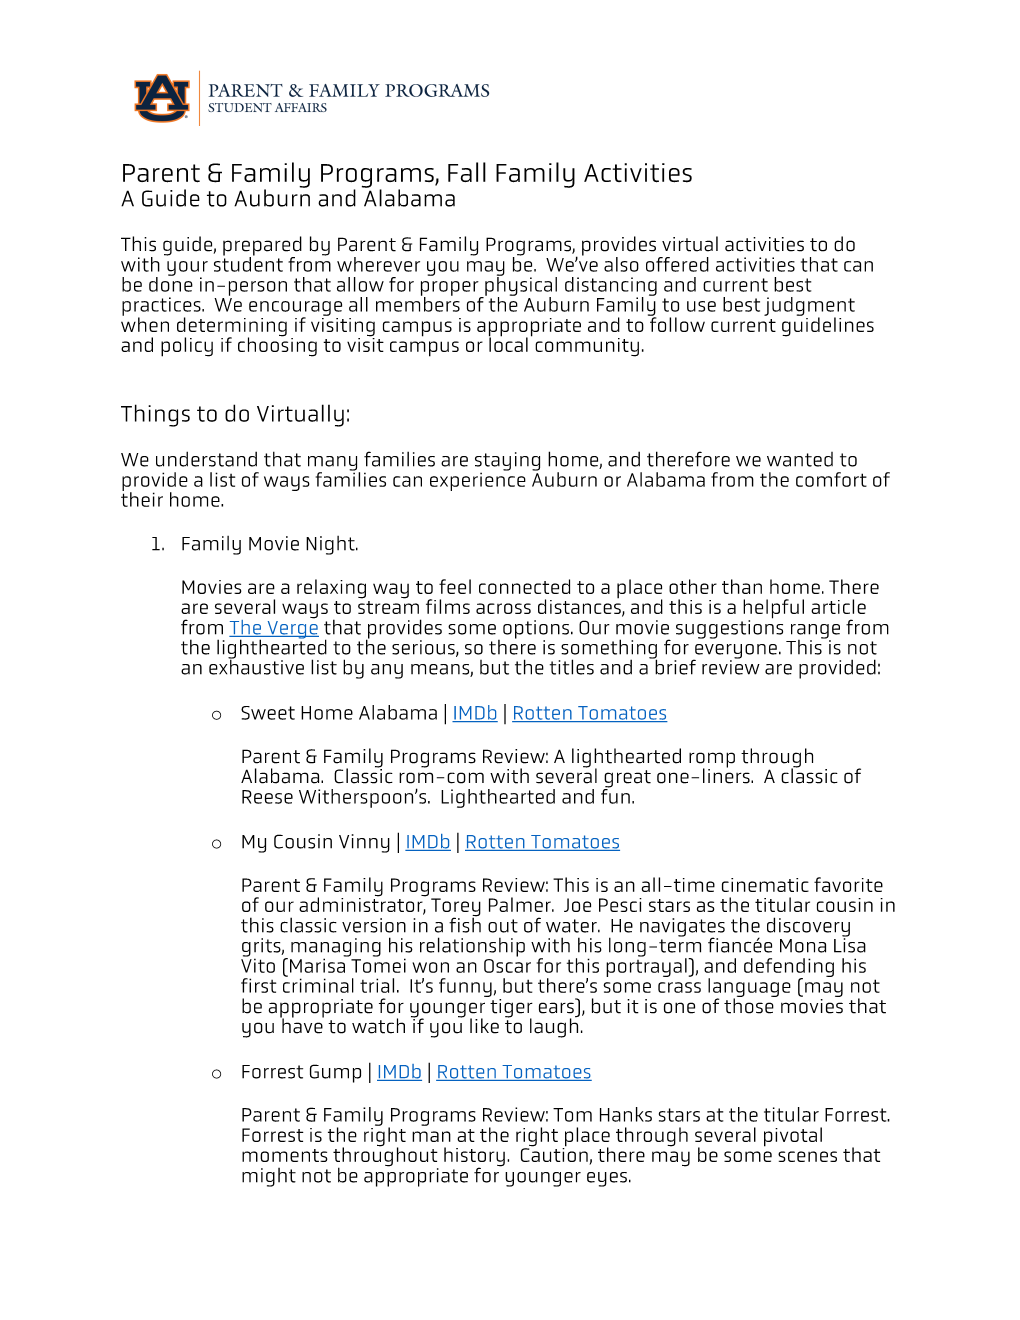 Parent & Family Programs, Fall Family Activities